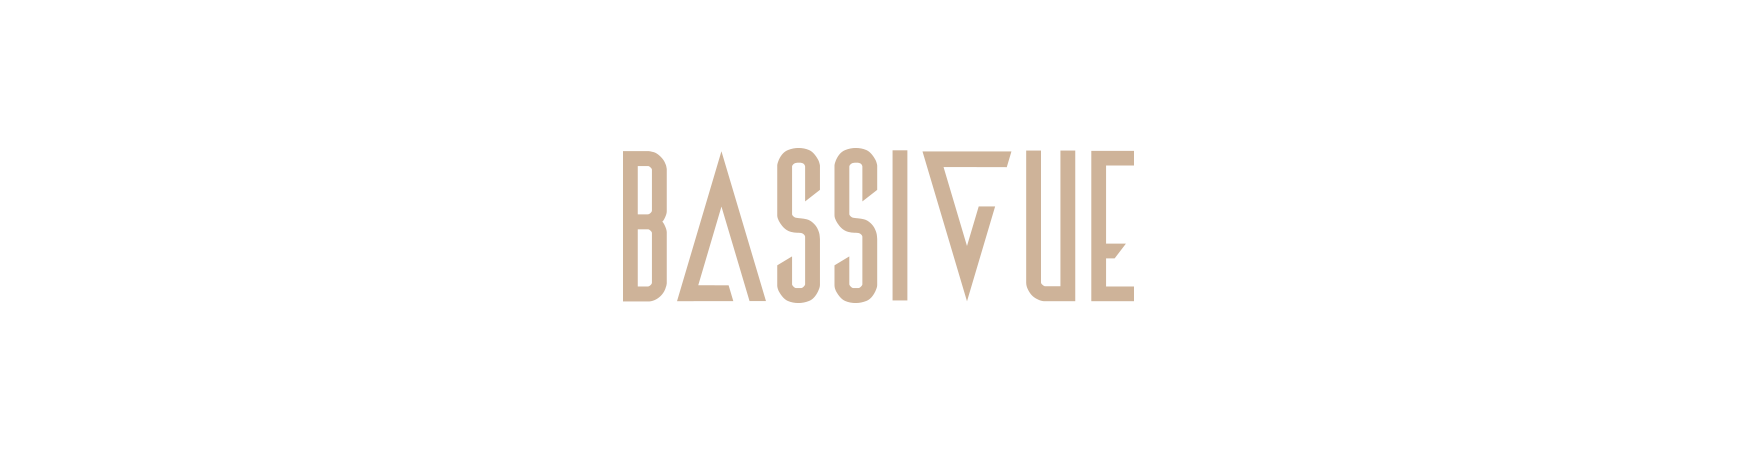 Bassigue